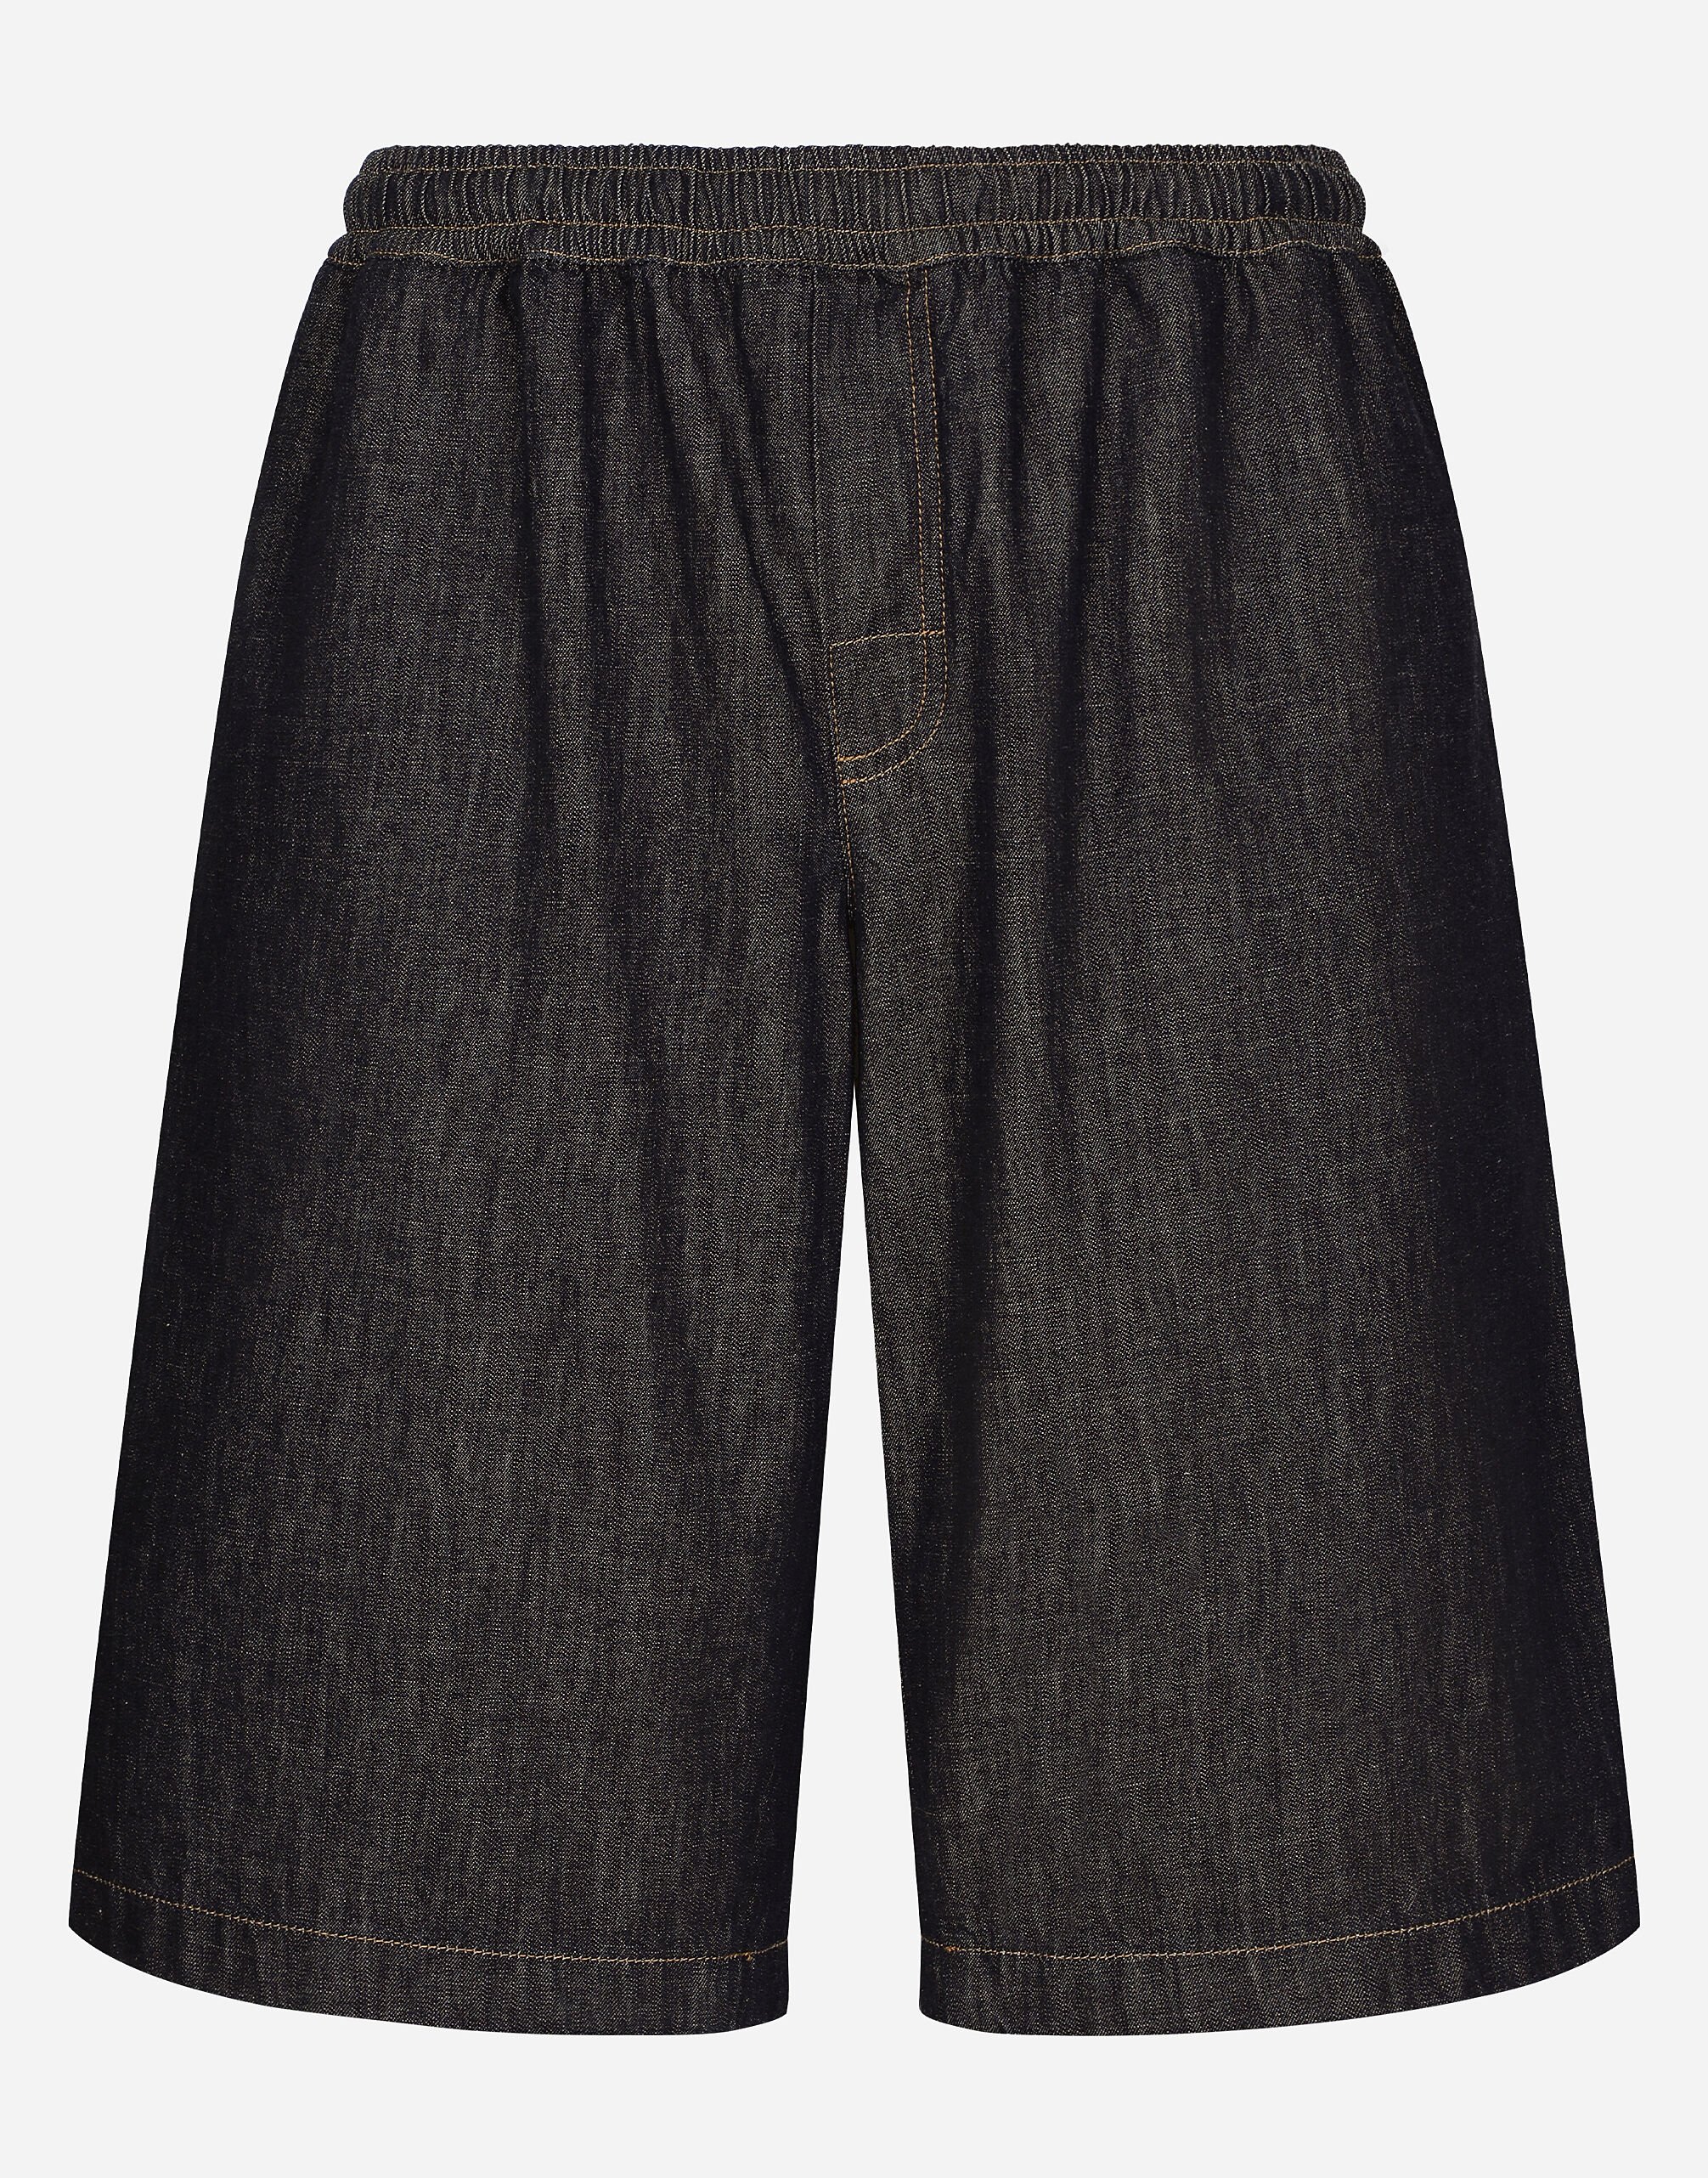 Dolce & Gabbana Denim jogging shorts with embroidery Print G5IX8THS5RU